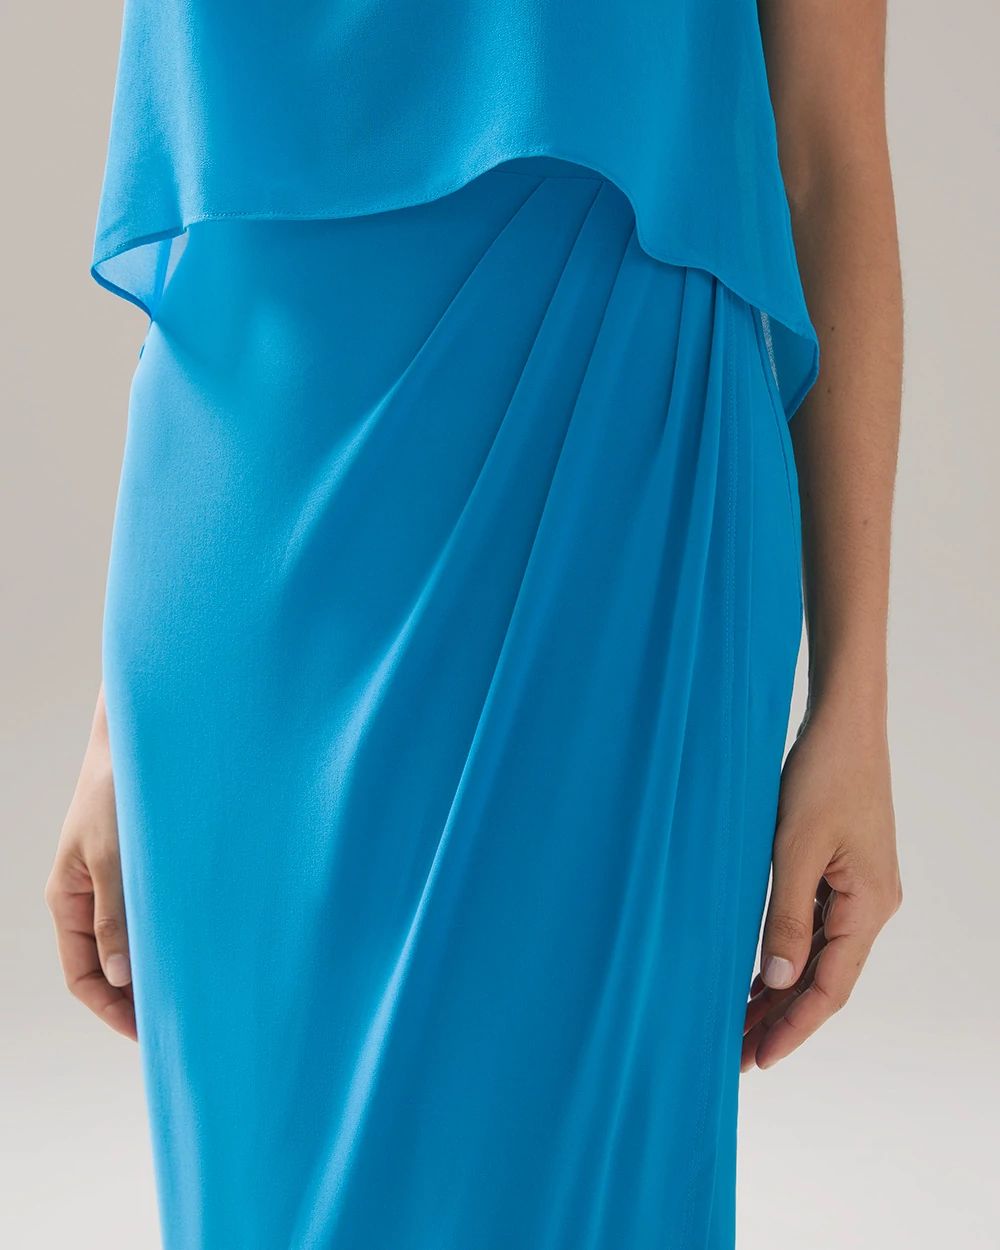 Chiffon & Matte Jersey Halter Dress click to view larger image.